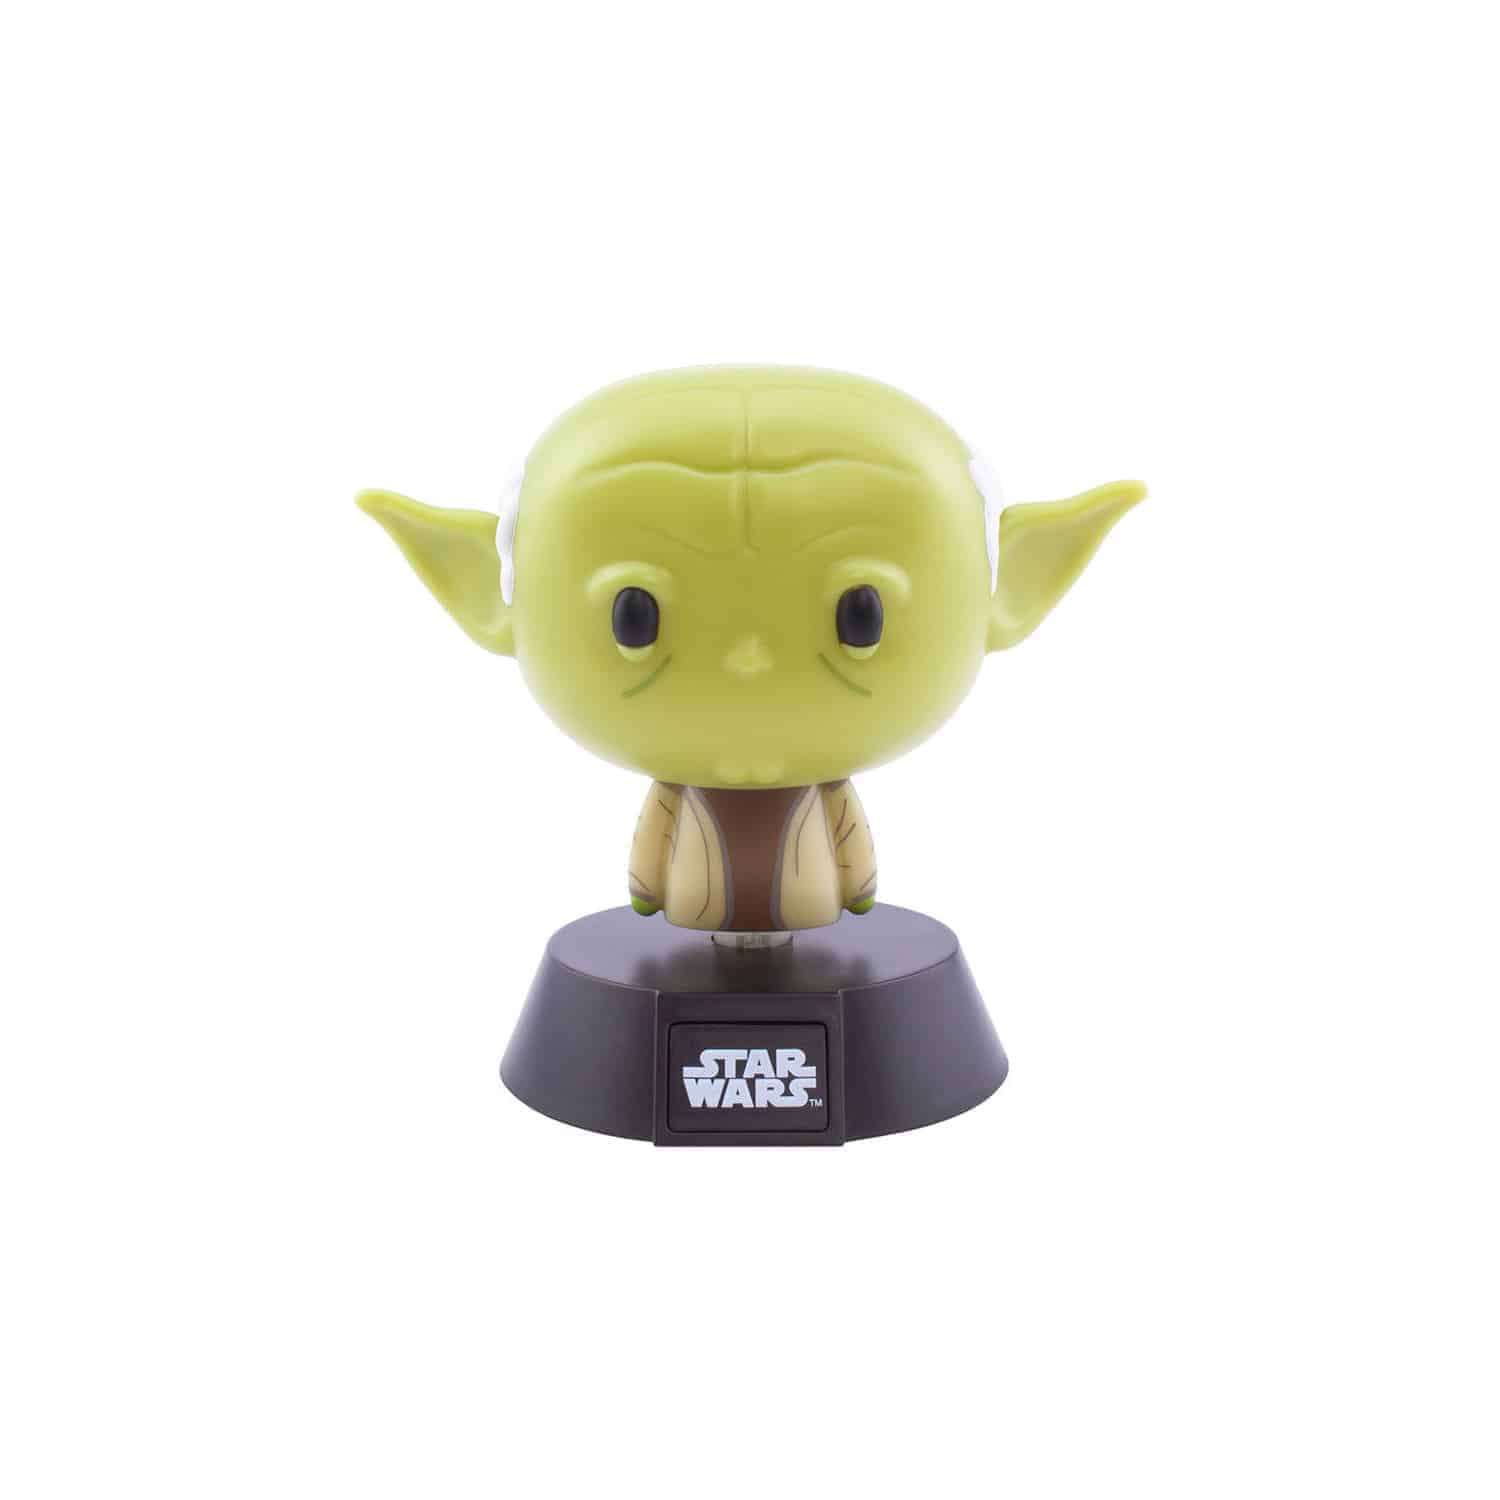 Star Wars - Yoda Icon Light